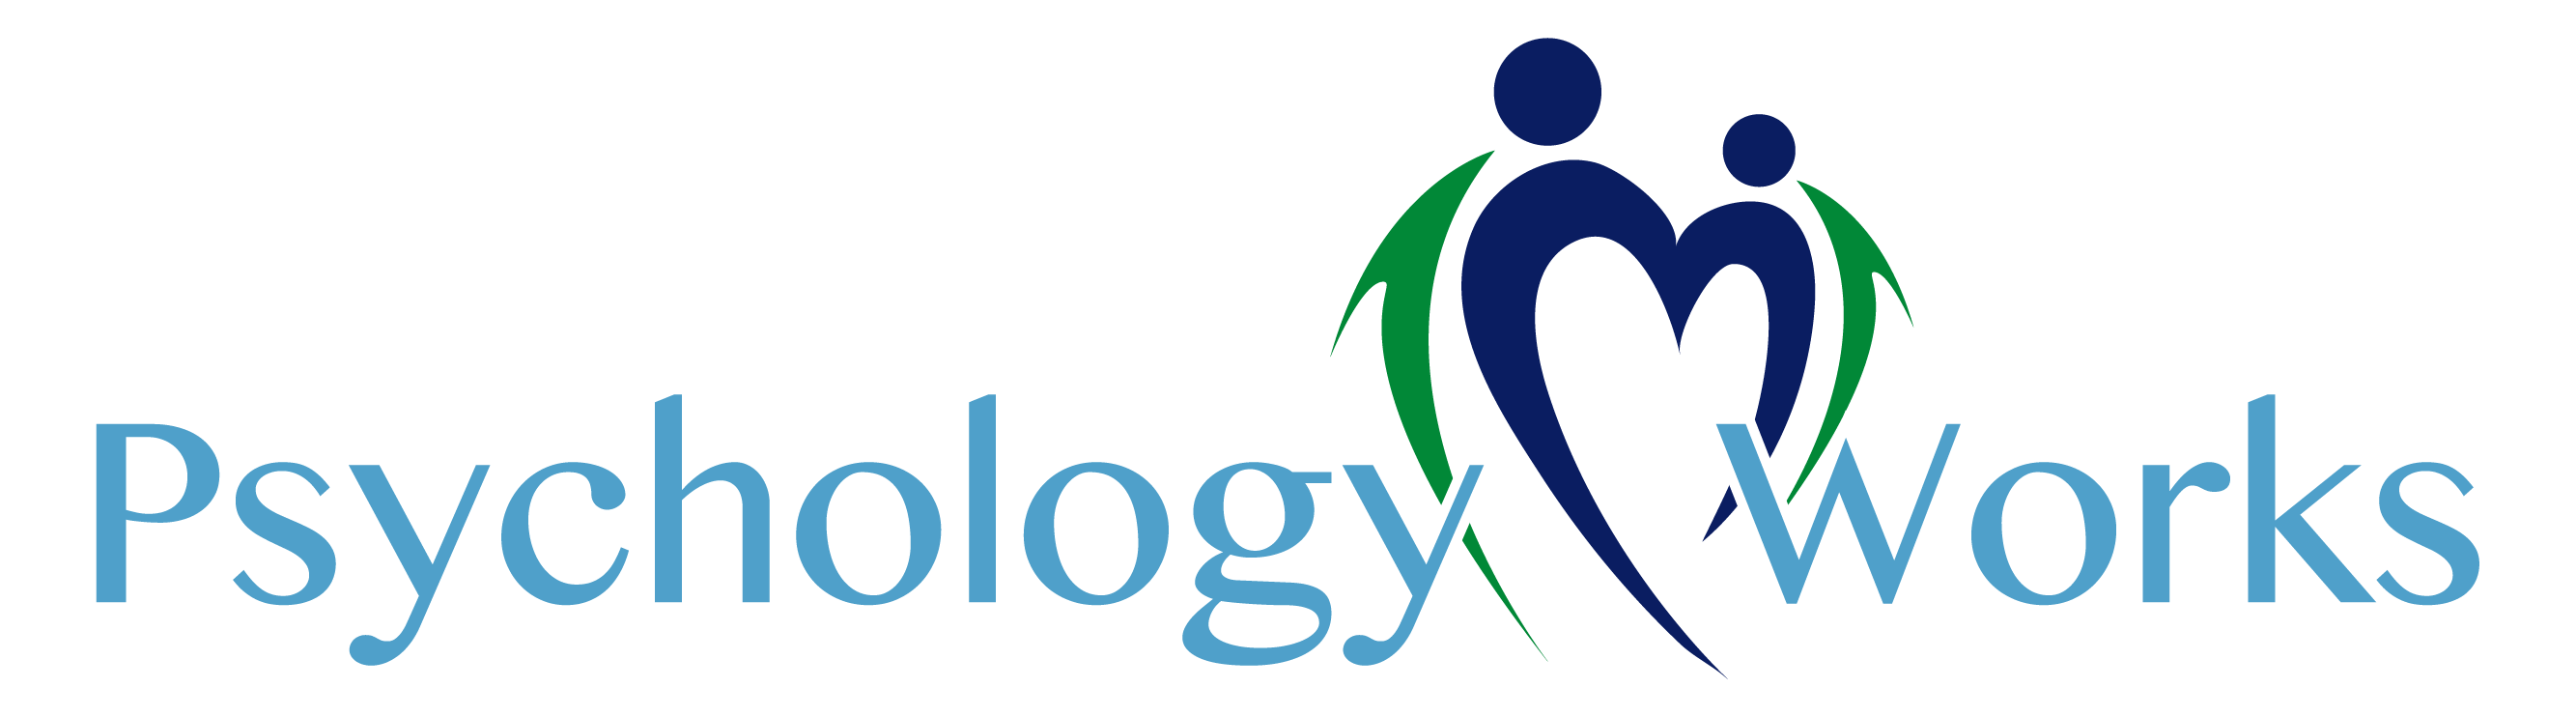 Psychology Works Logo